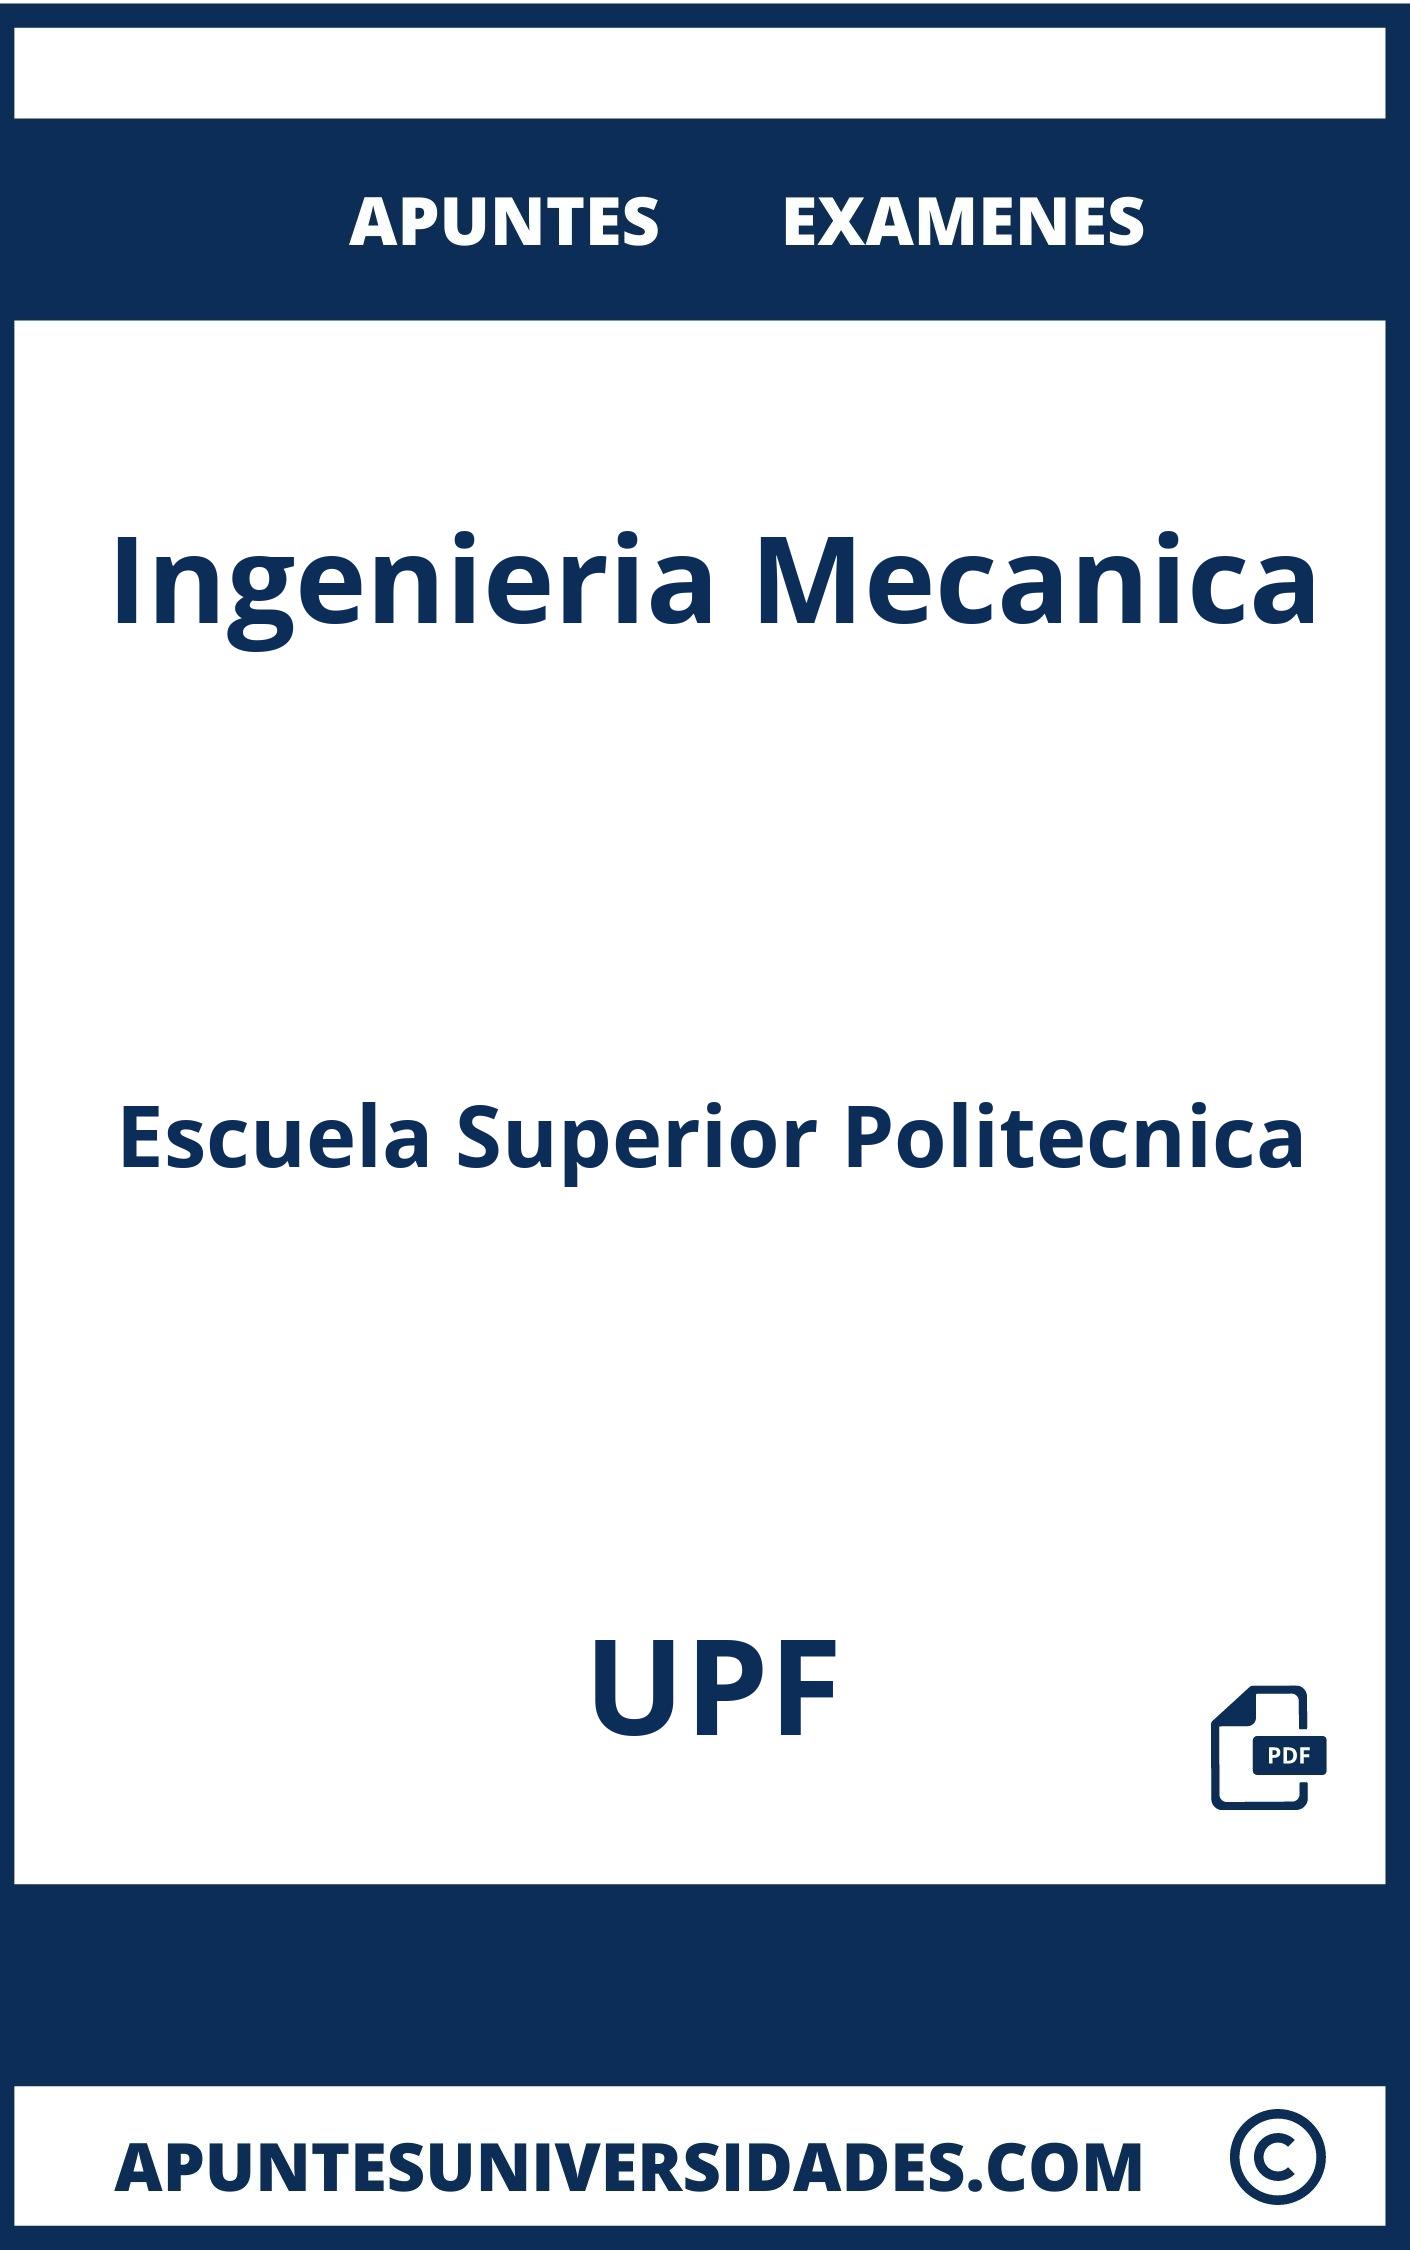 Examenes y Apuntes de Ingenieria Mecanica UPF